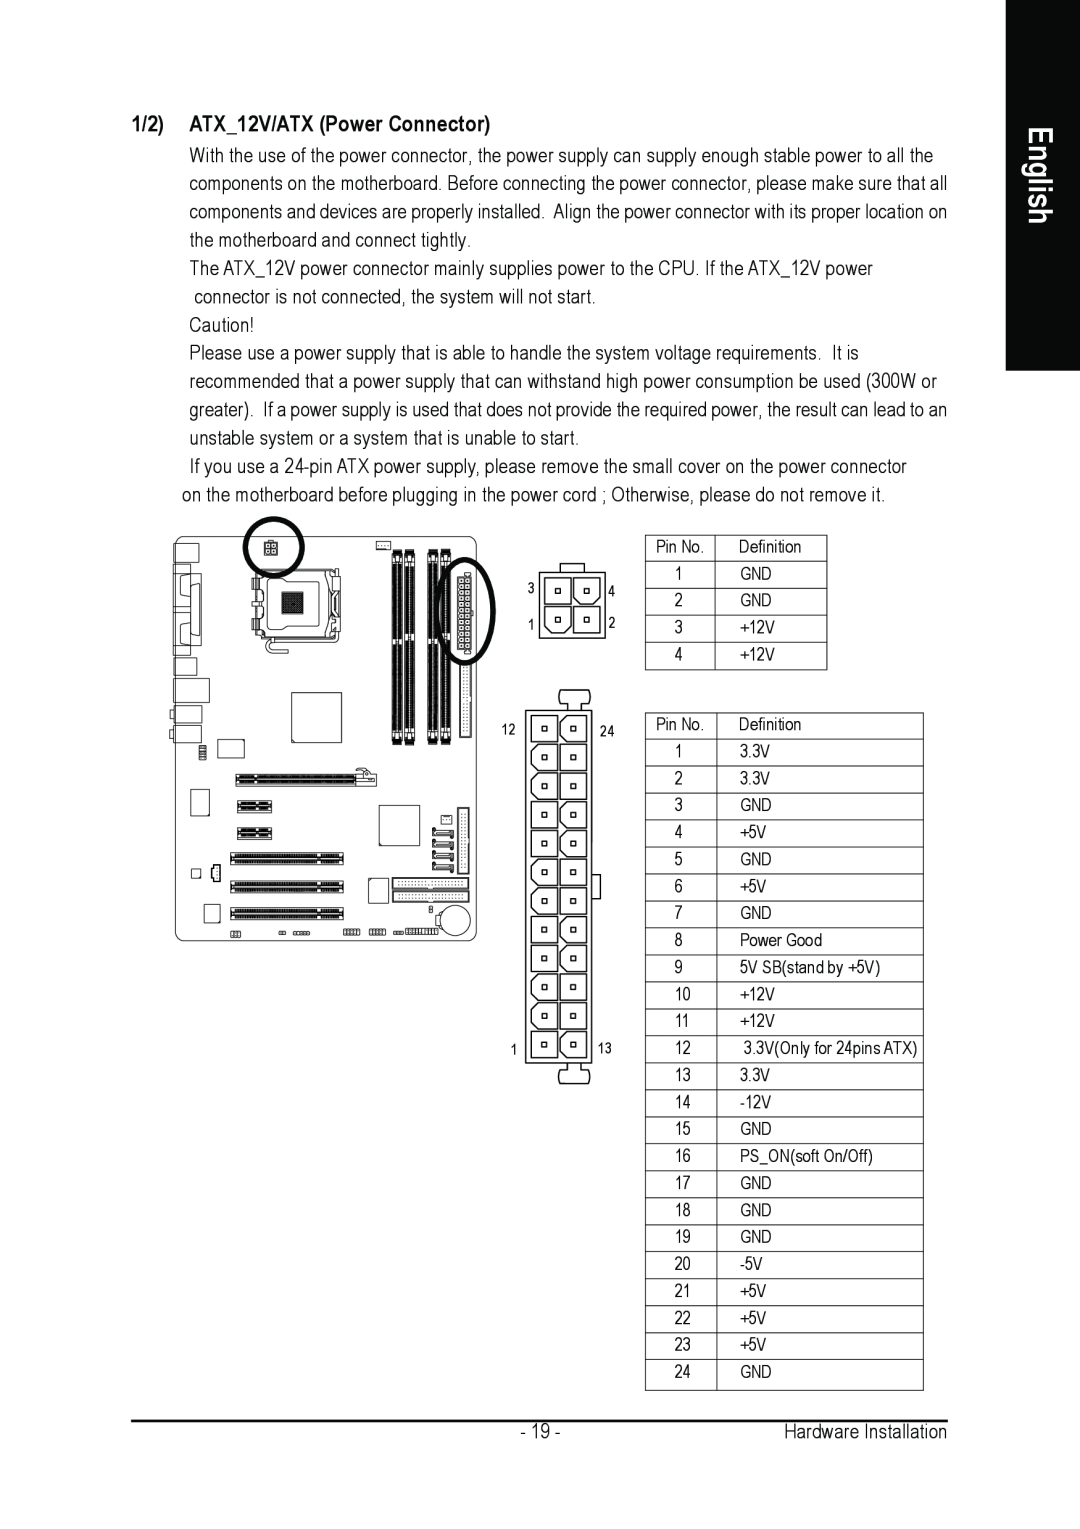 Gigabyte GA-8I915P DUO user manual 1/2 ATX12V/ATX Power Connector, English 